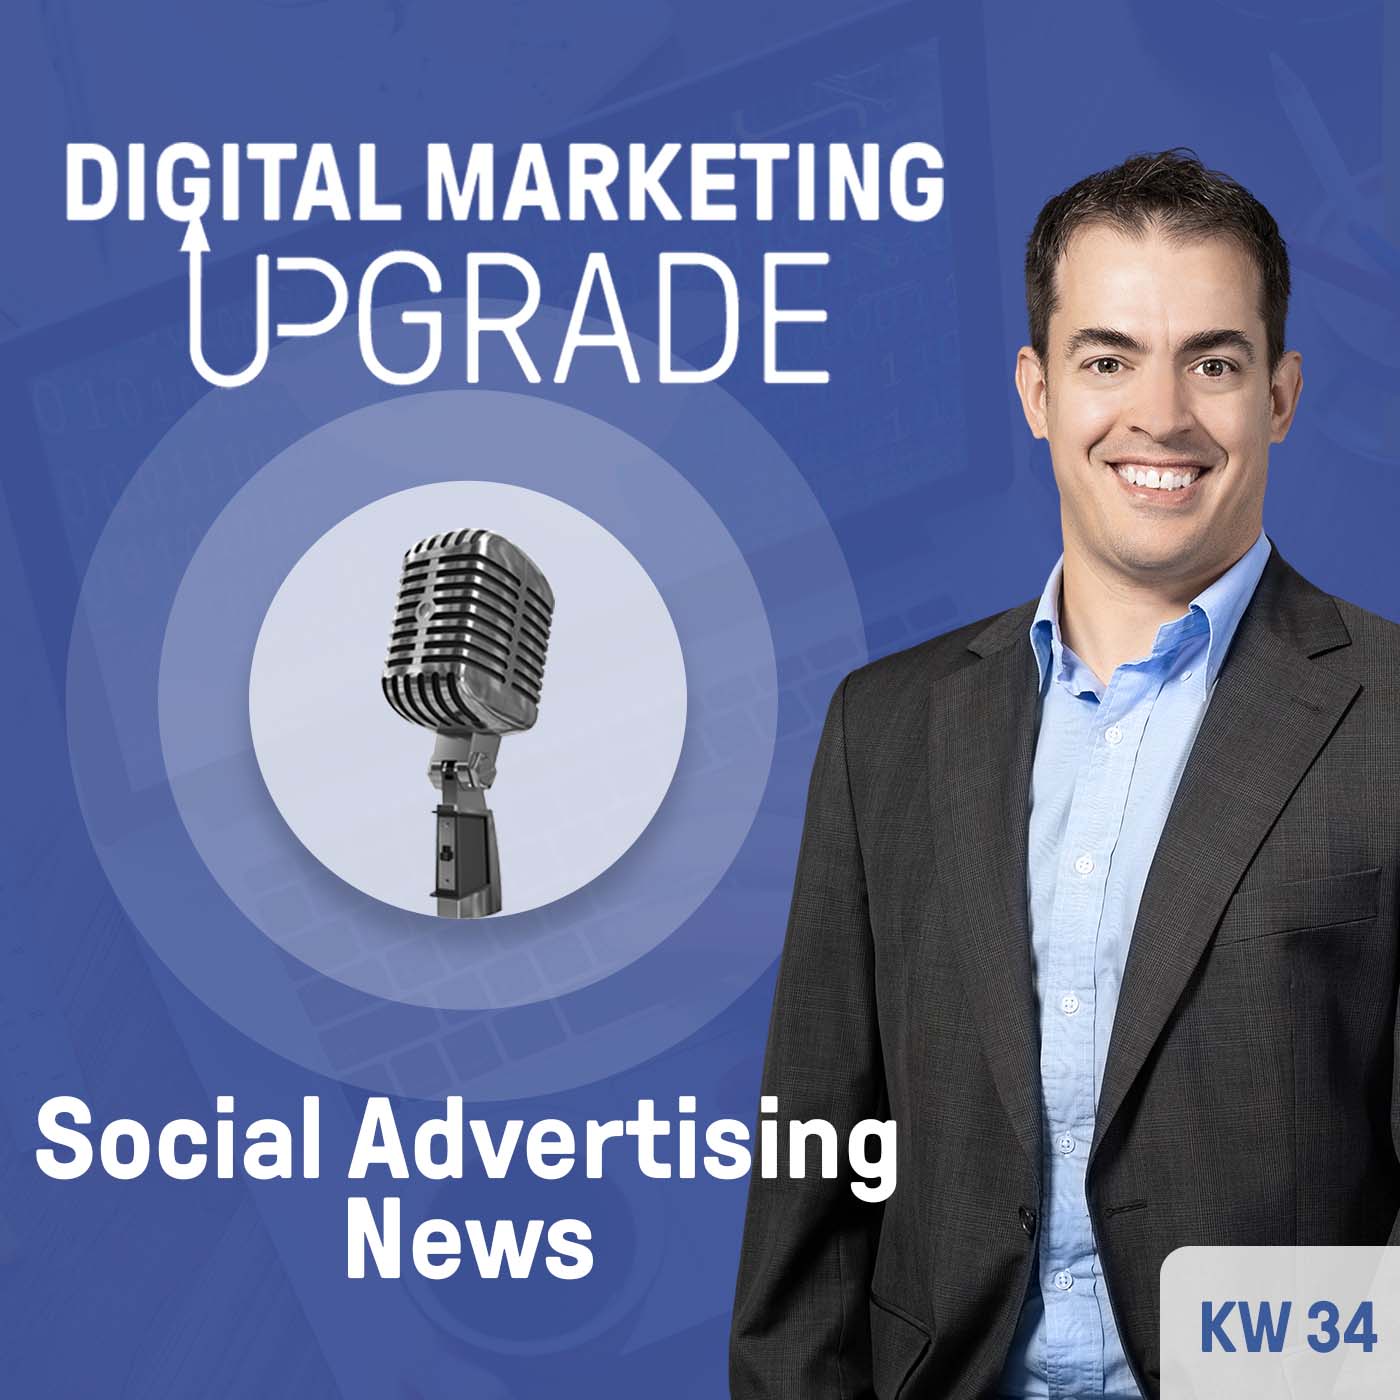 Social Advertising News - KW 34/23